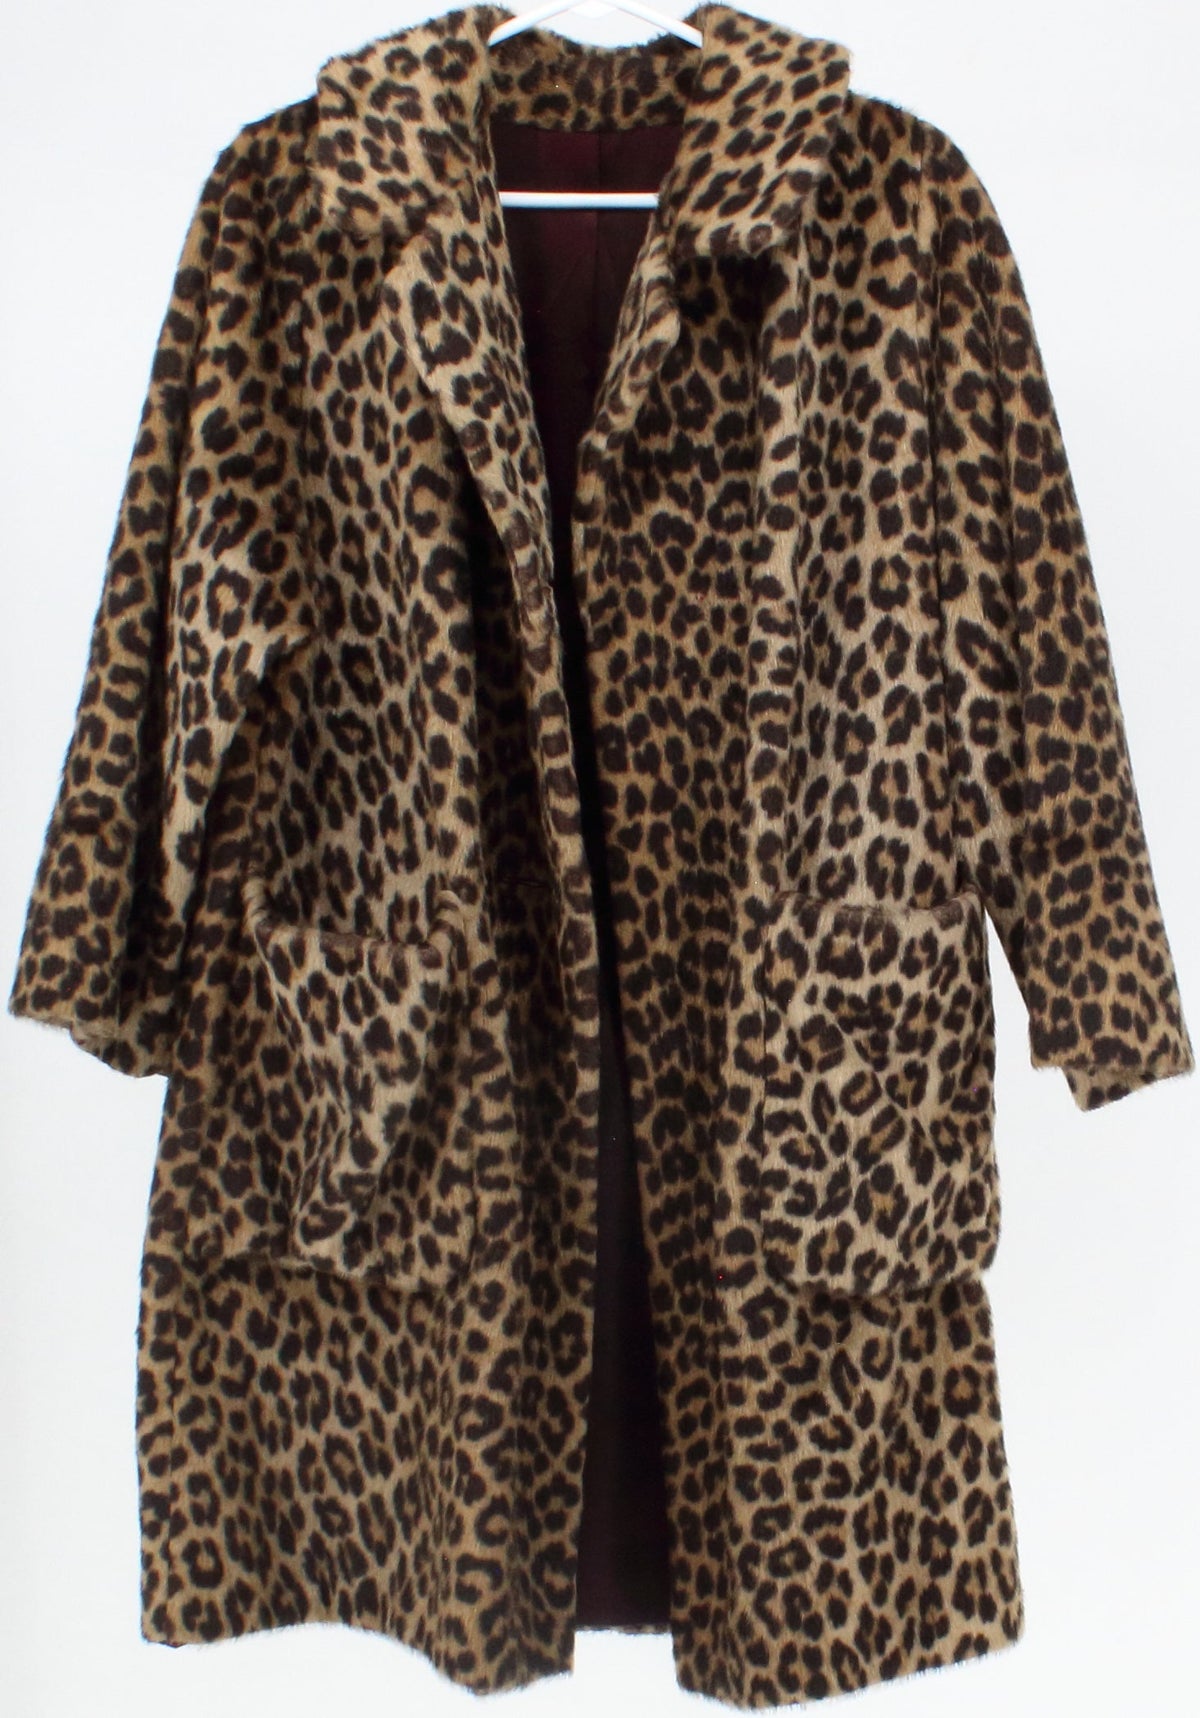 Leopard Print Women's Fur Coat